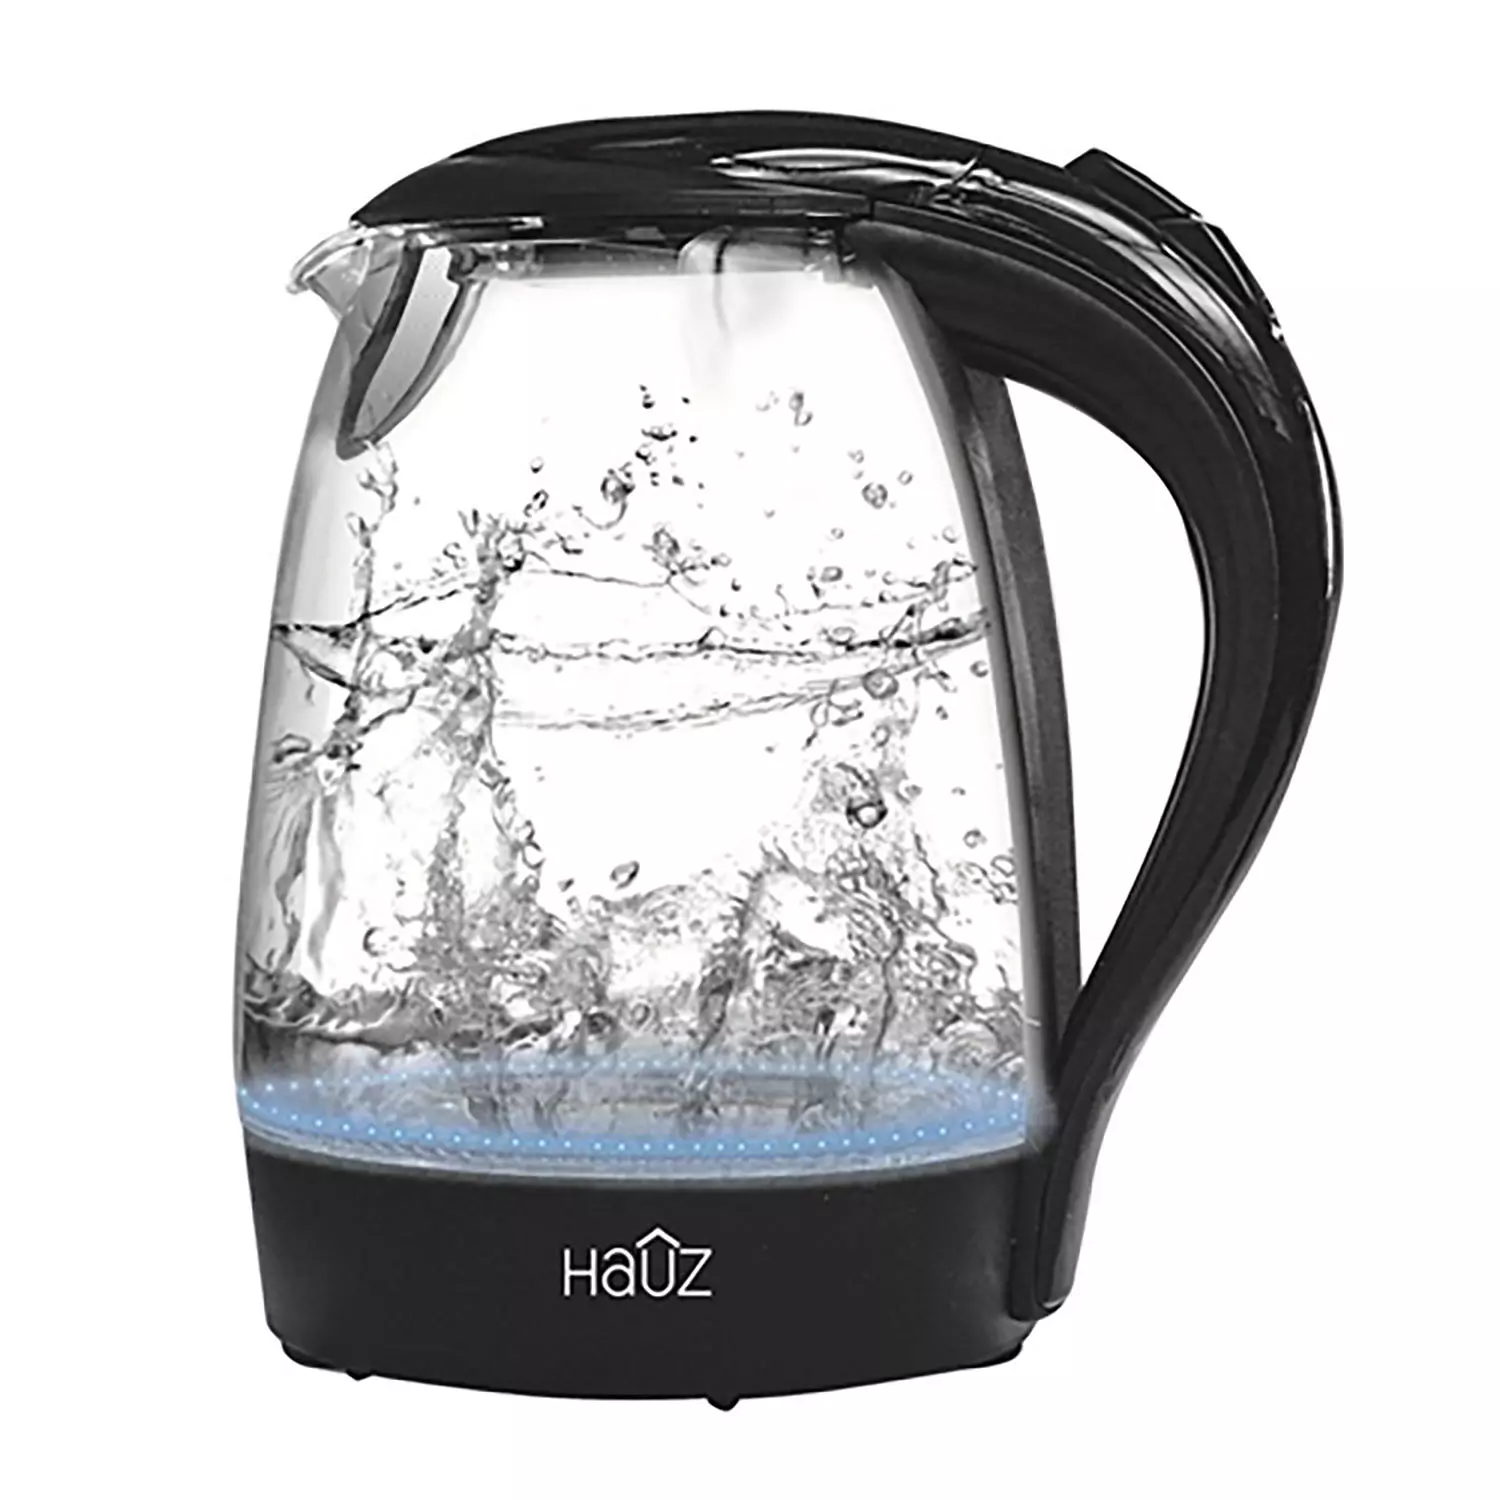 Hauz Basics - Illuminating glass kettle, 1.7L, black